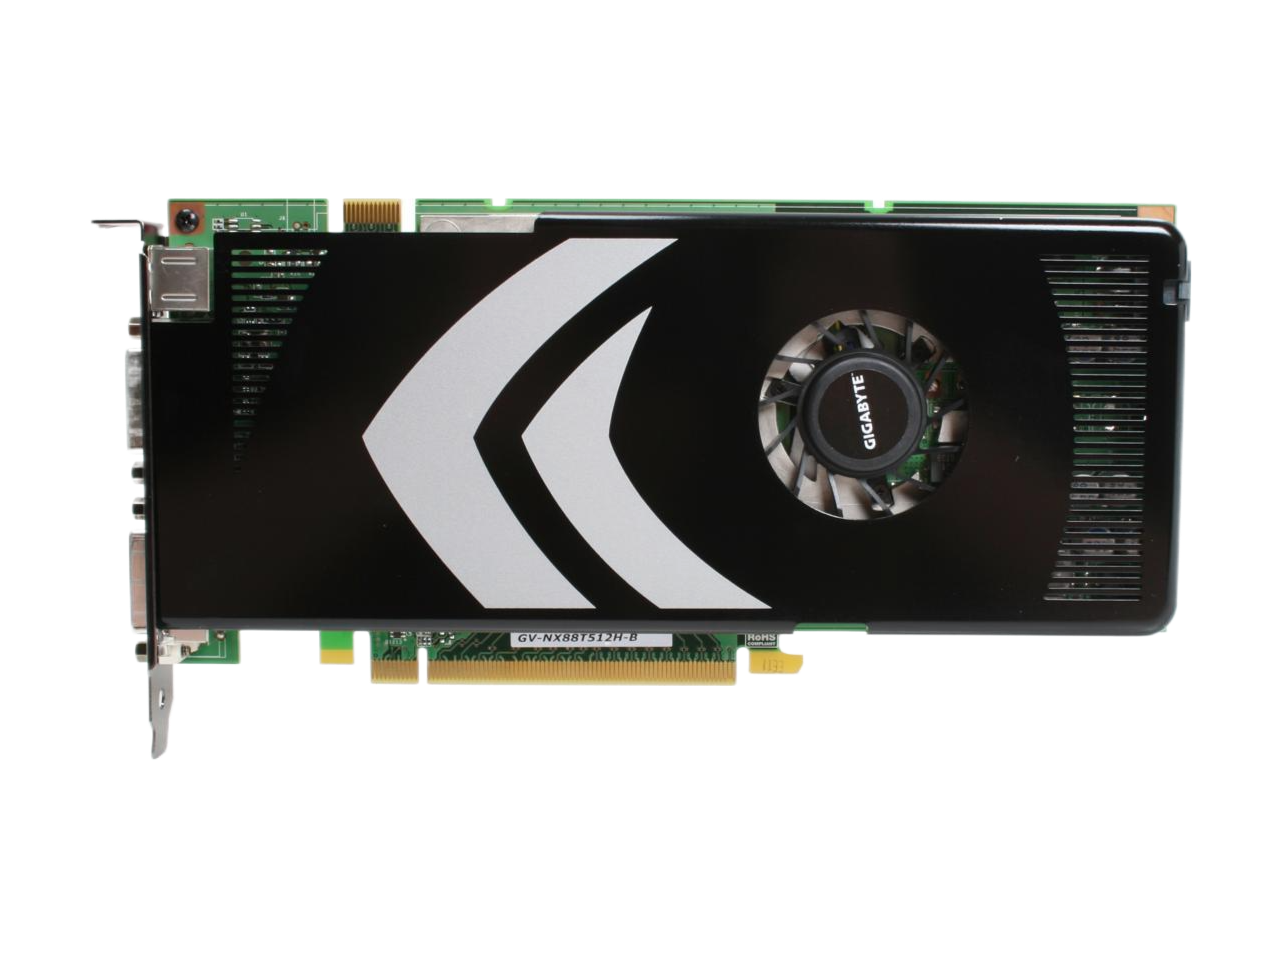 NVIDIA GeForce 9800 GT 512MB GDDR3 PCIe x16 DVI Gaming Graphics Card